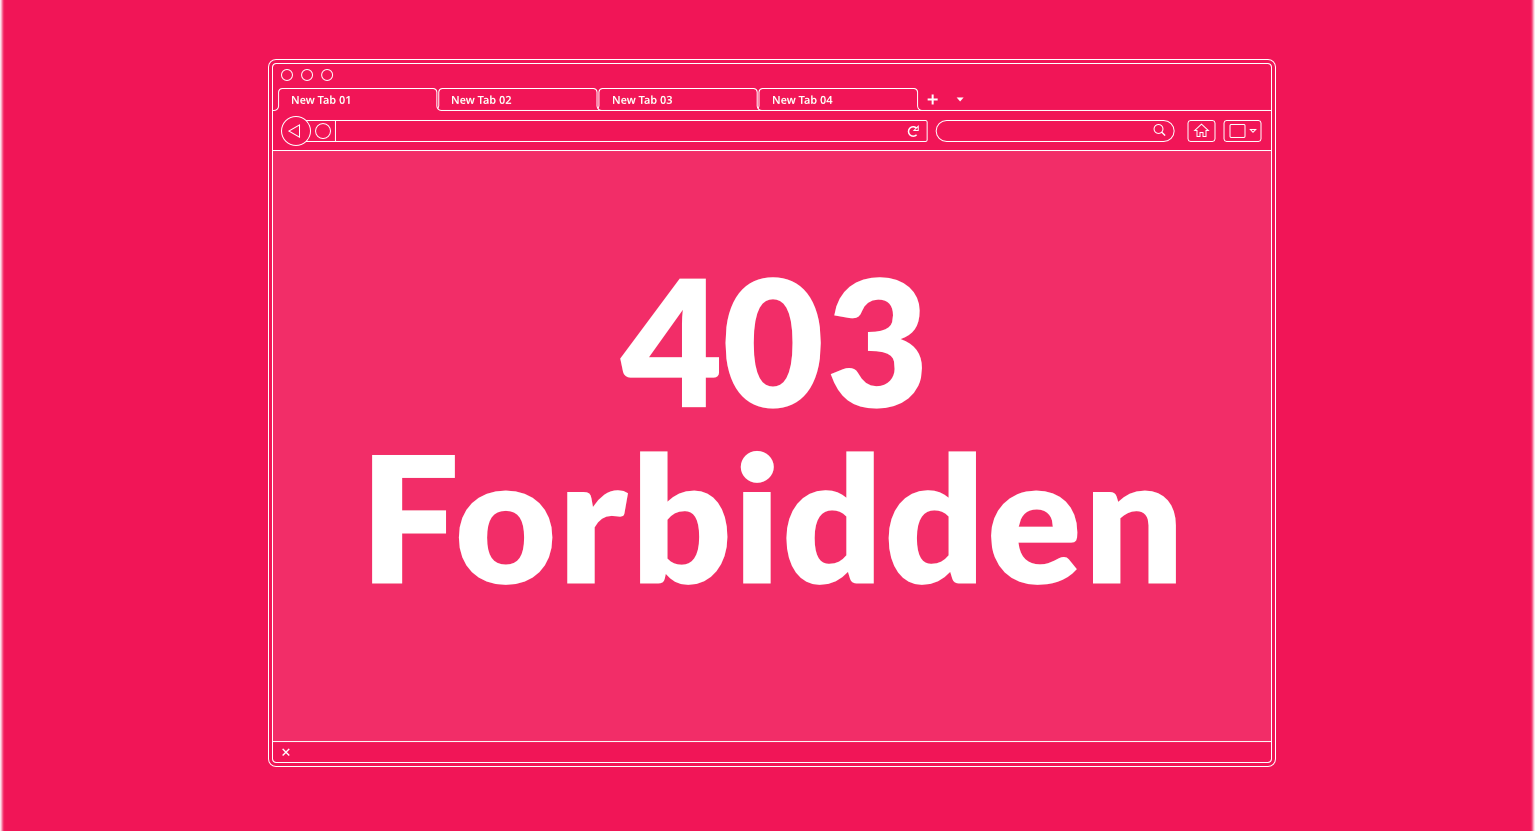 403 : Forbidden